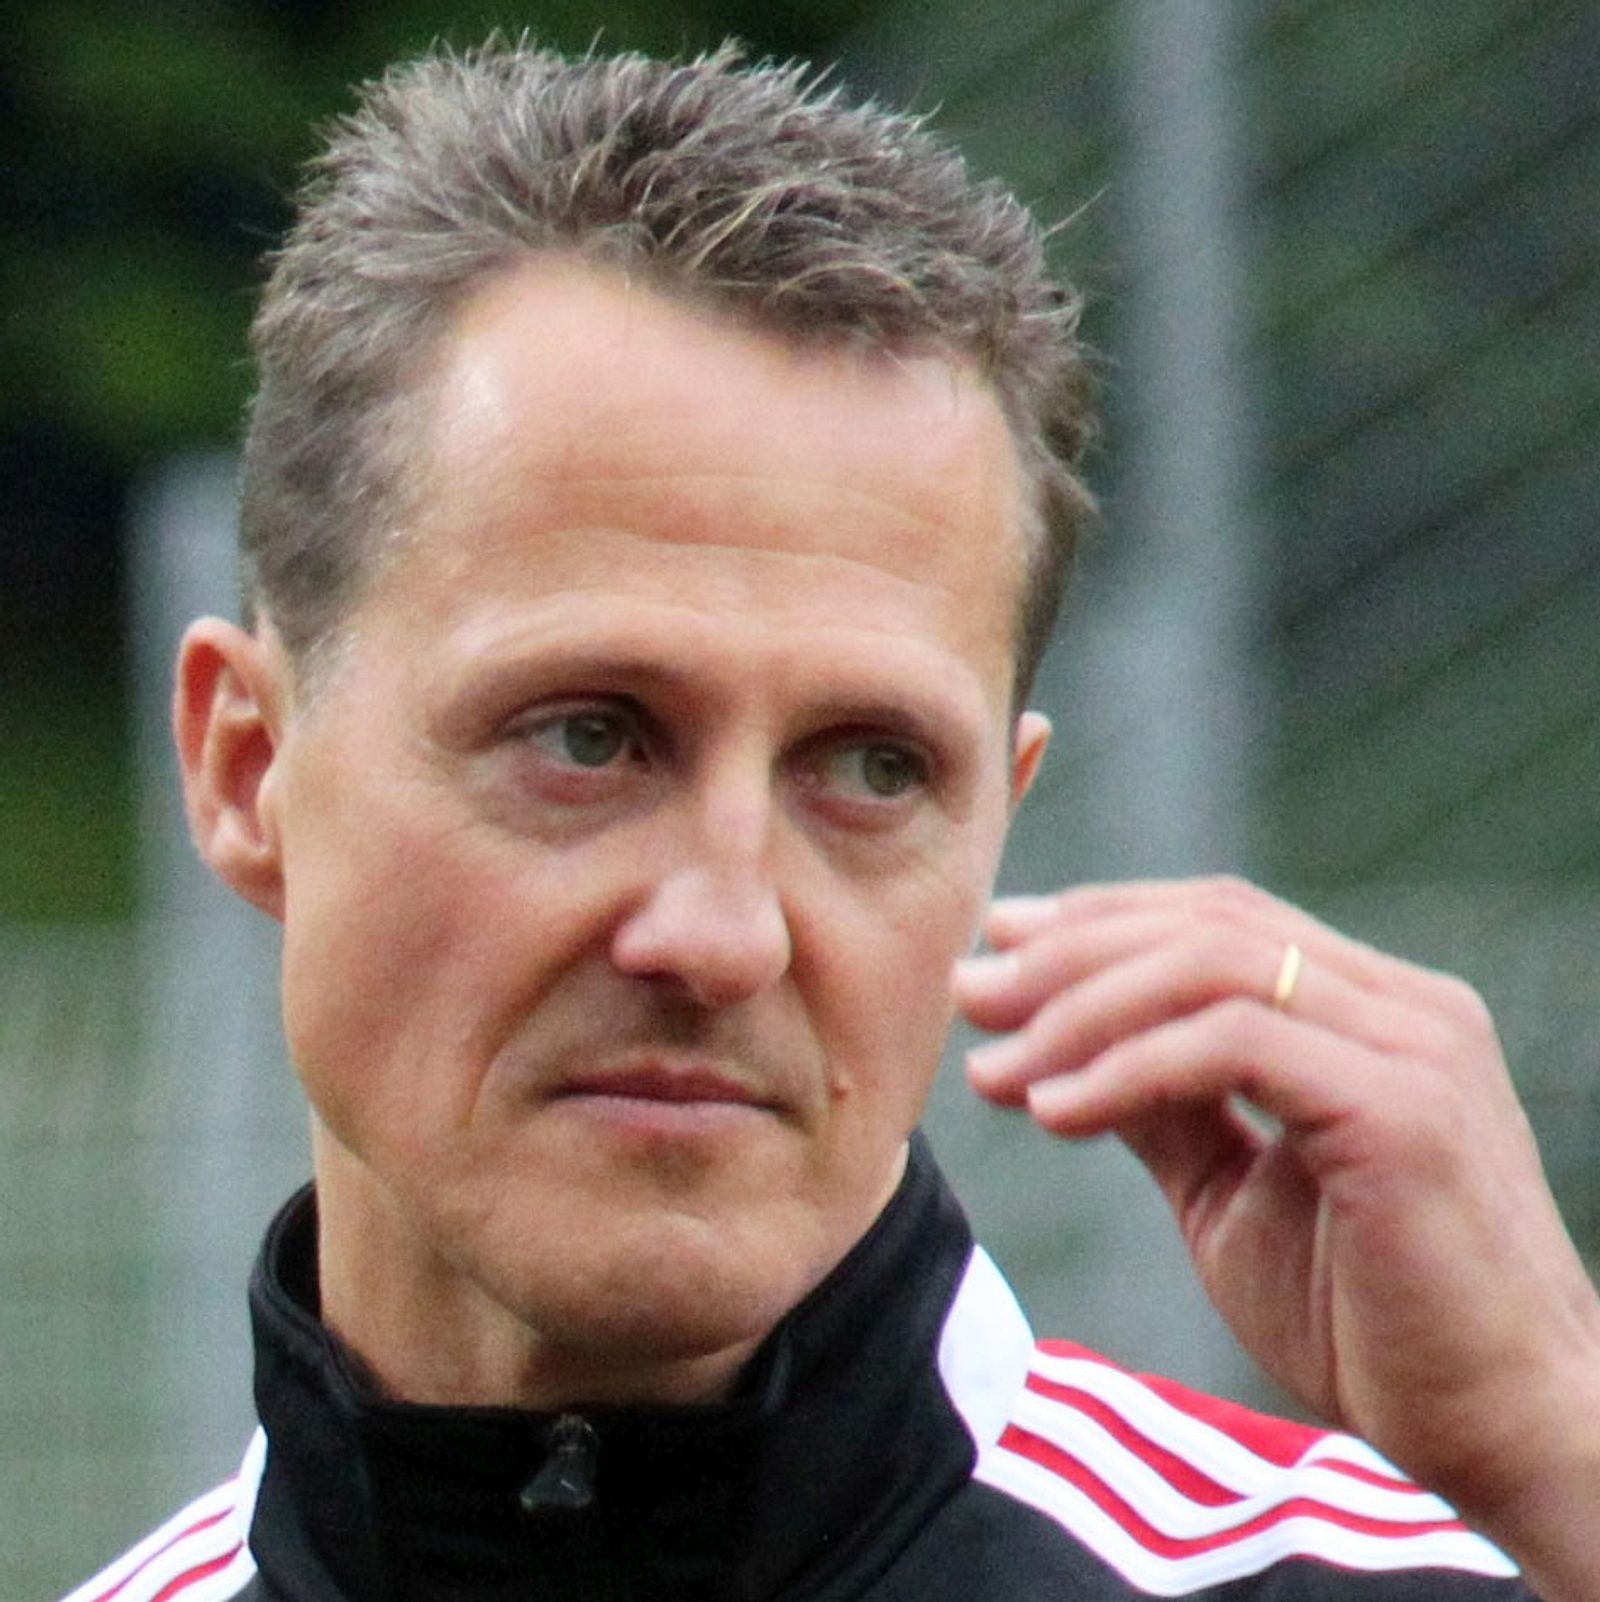 So geht es Michael Schumacher aktuell: News